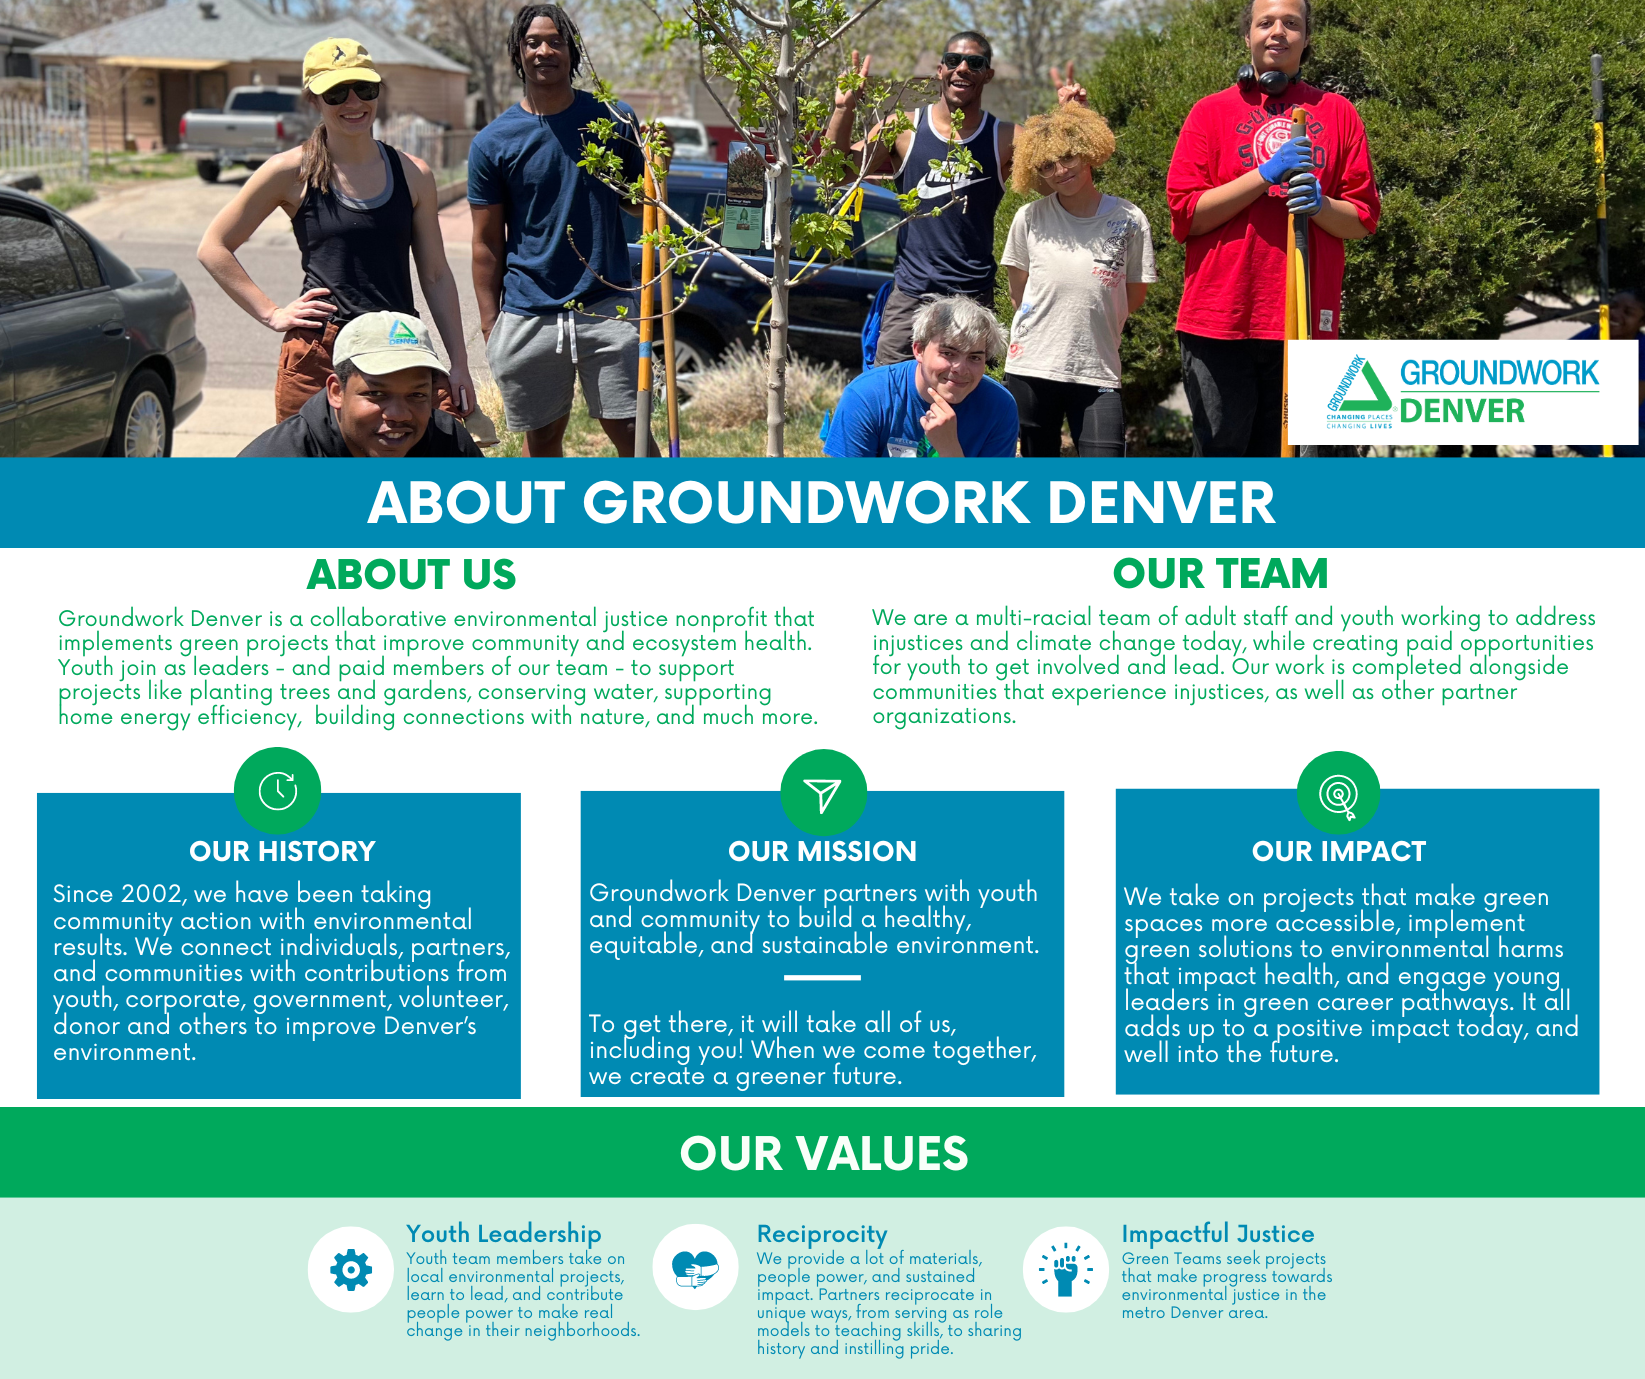 About Groundwork Denver